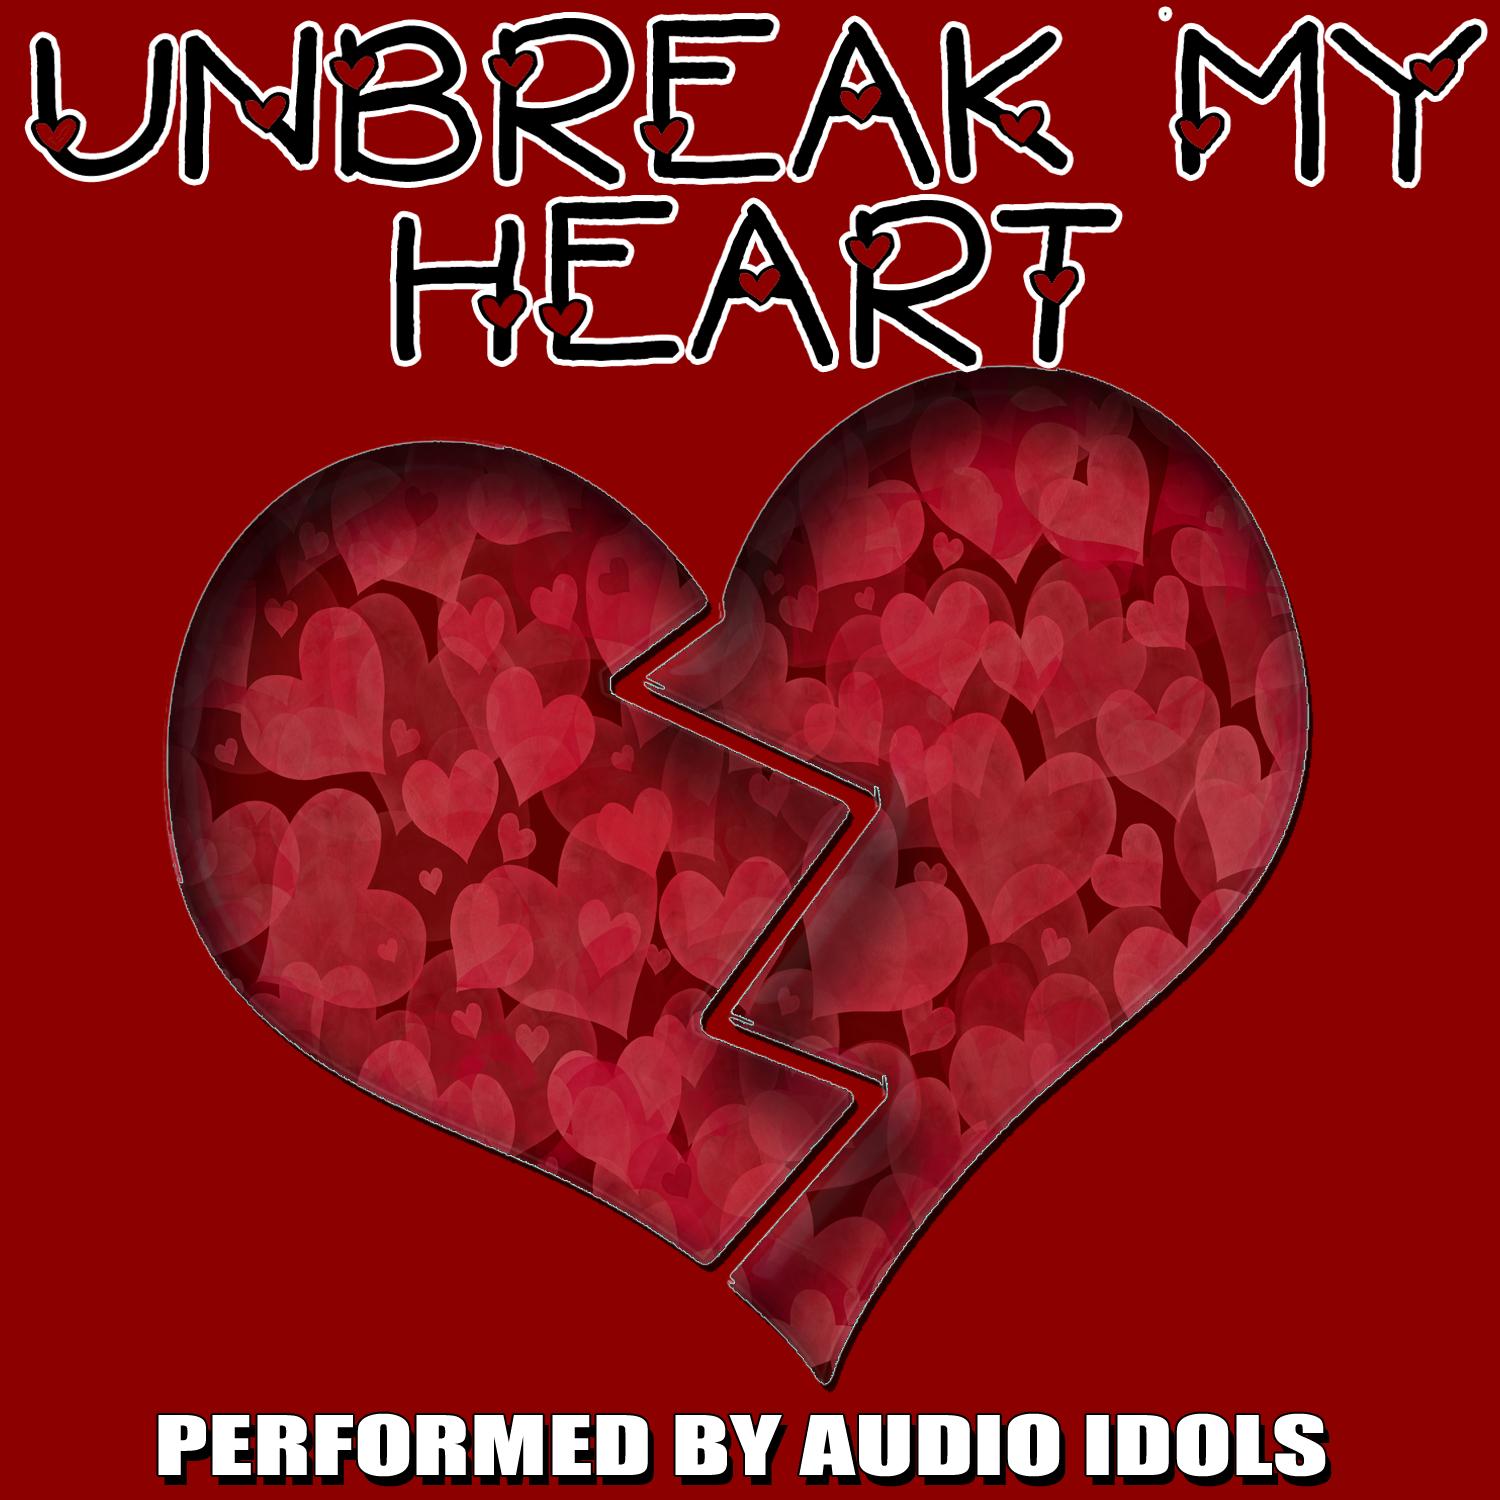 Unbreak My Heart...